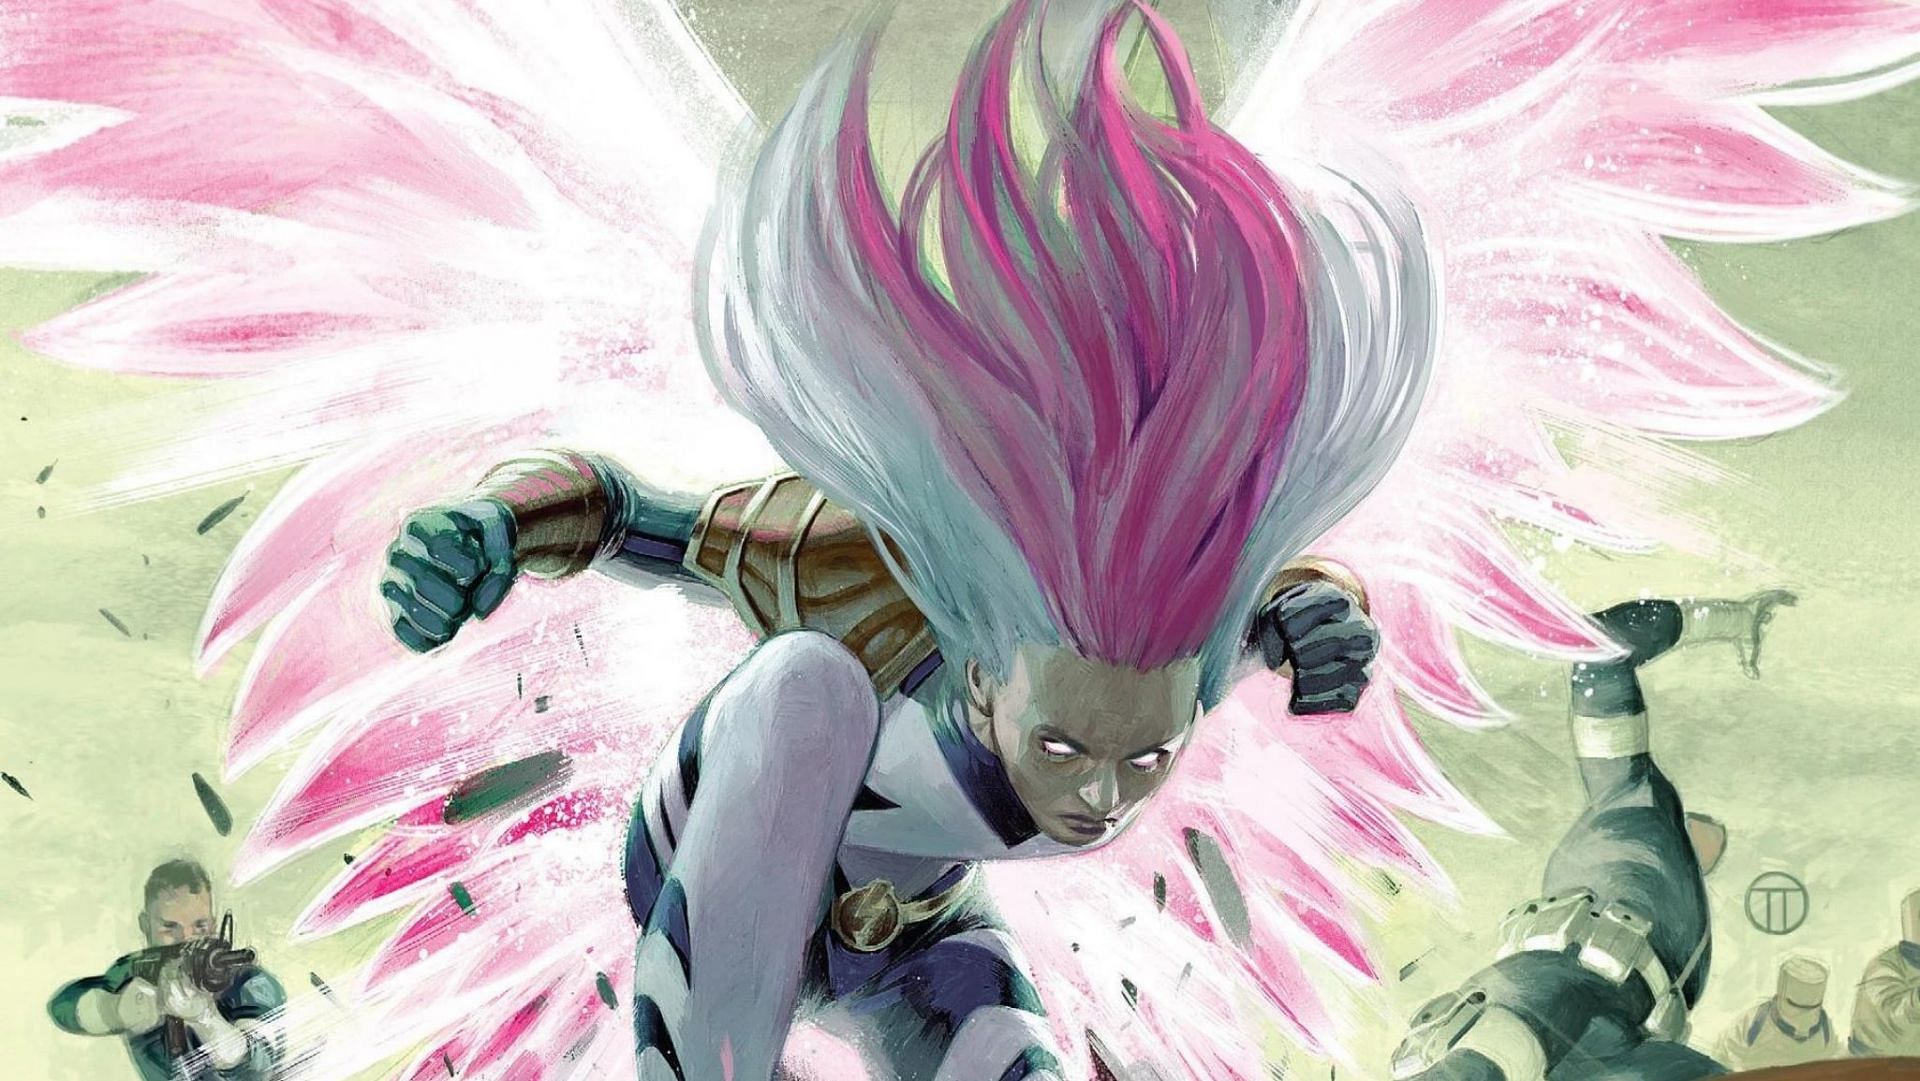 Songbird, the former villain turned hero, unleashes her sonic powers (Image via Sportskeeda)